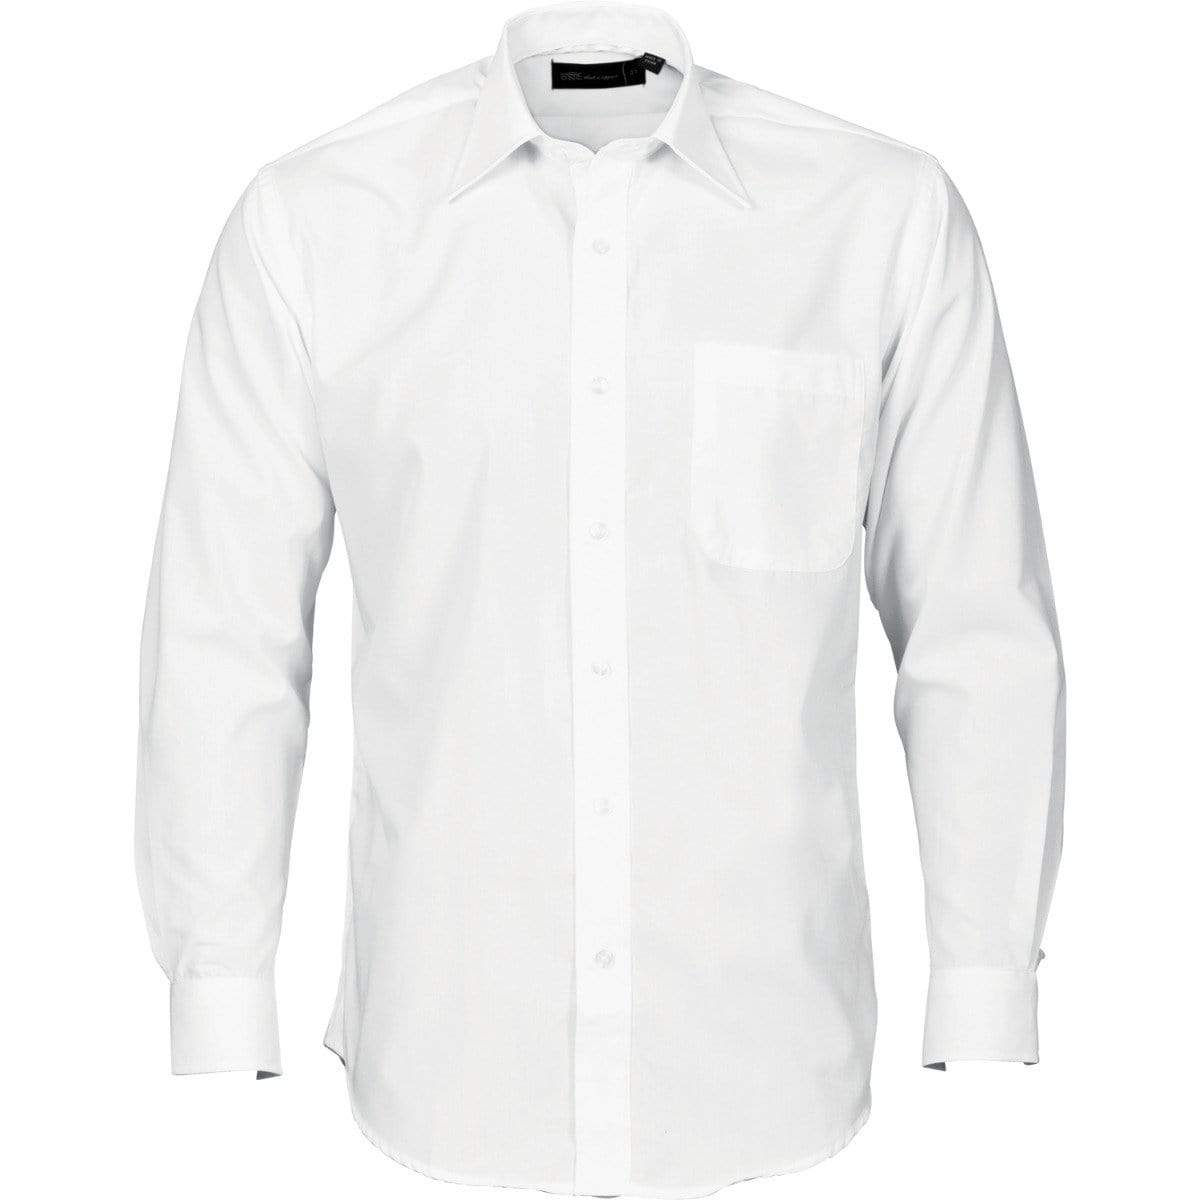 Dnc Workwear Polyester Cotton Long Sleeve Business Shirt - 4132 Corporate Wear DNC Workwear White 5XL 